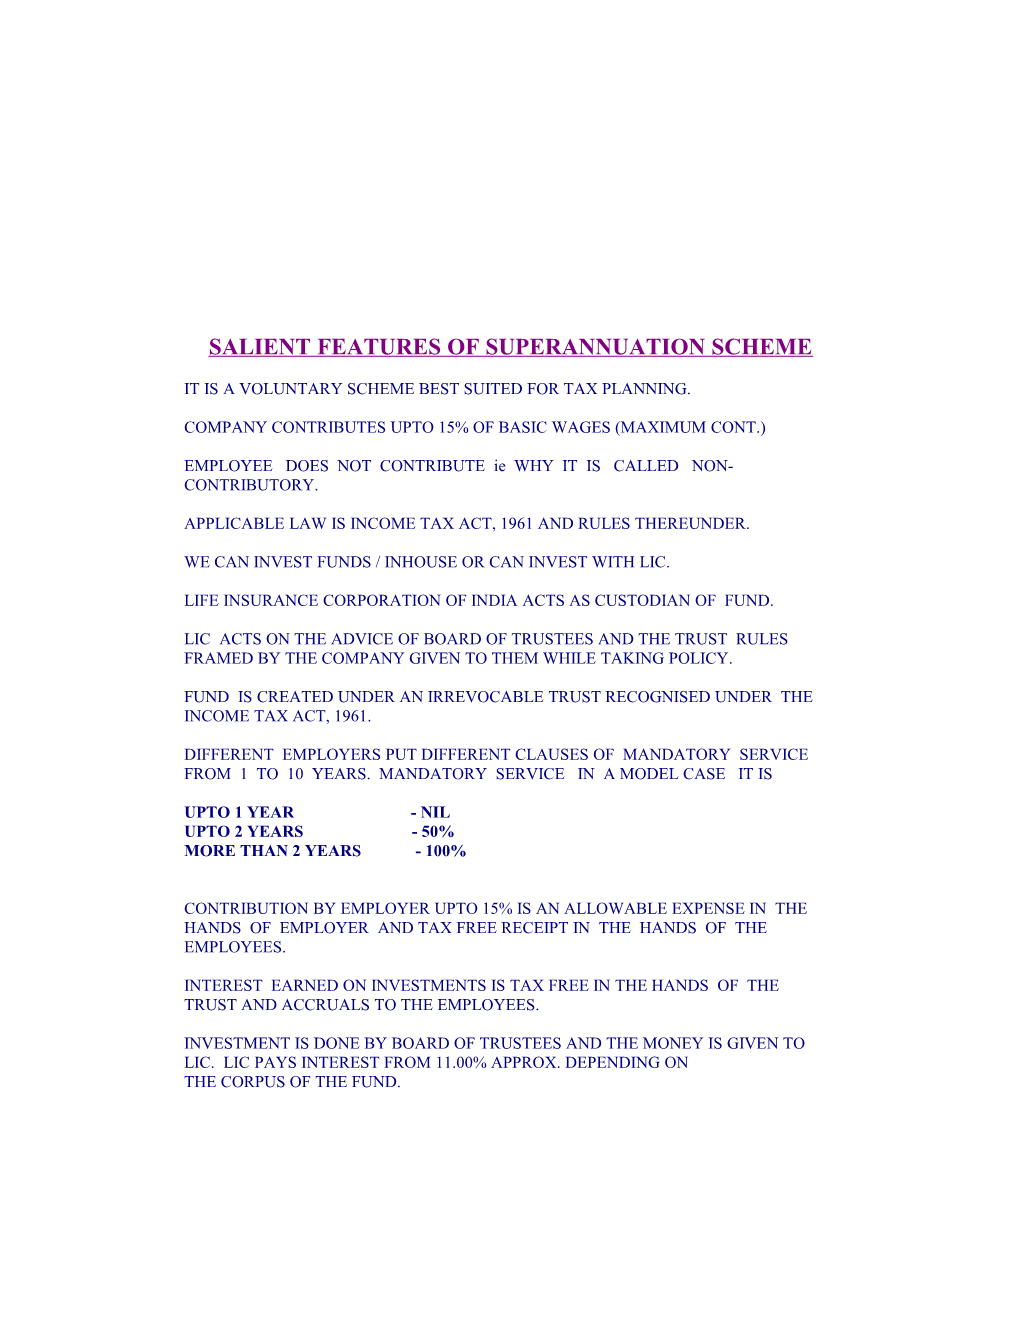 Salient Features of Superannuation Scheme